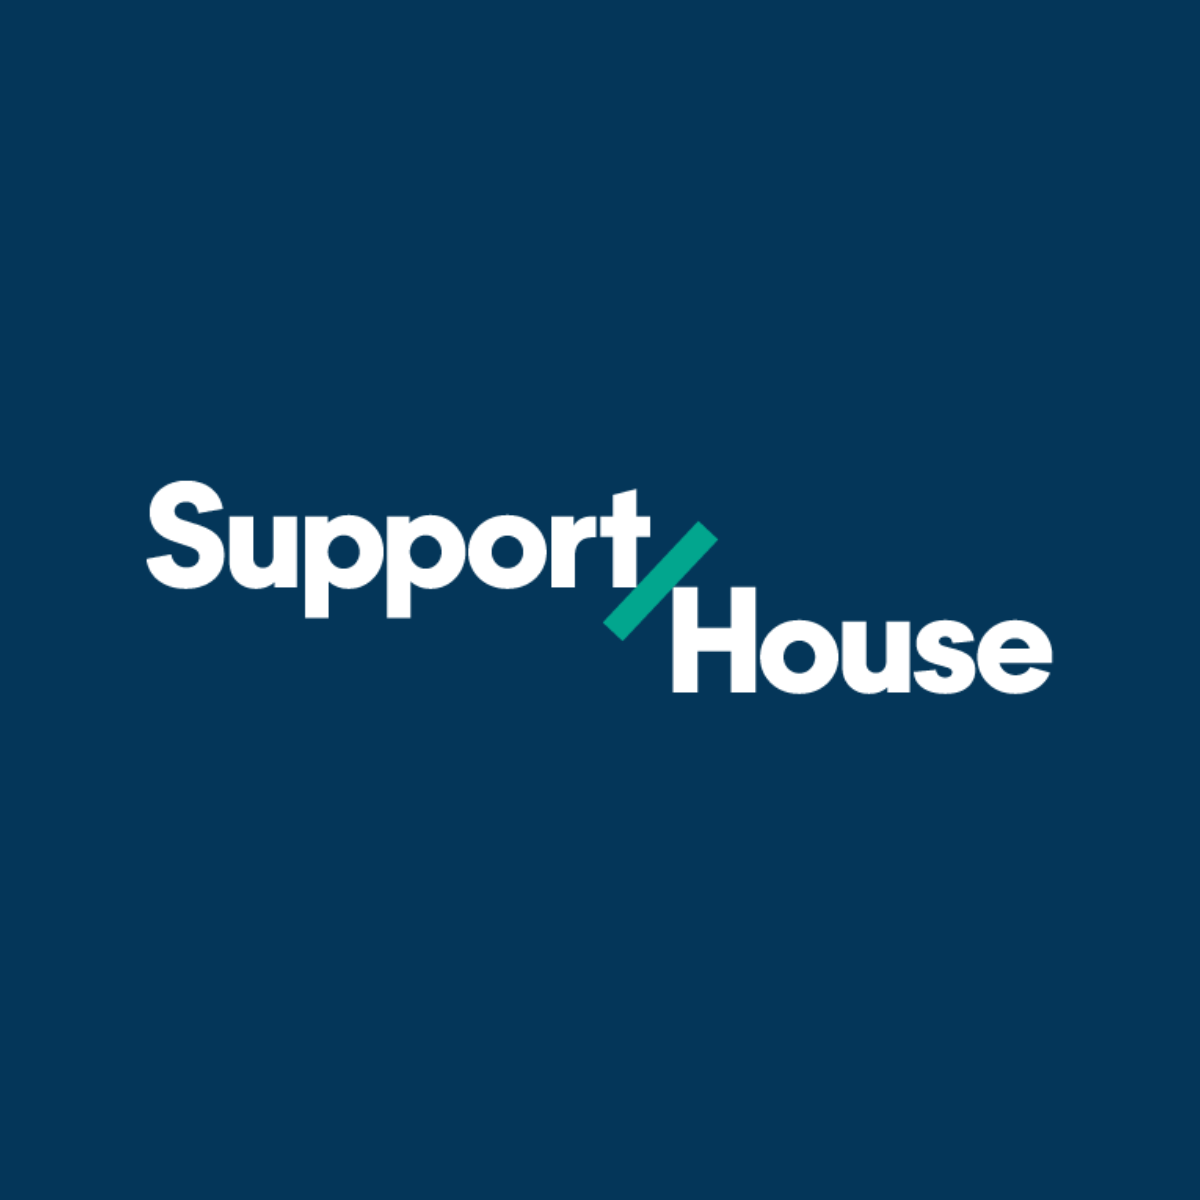 Support House logo on dark blue banner